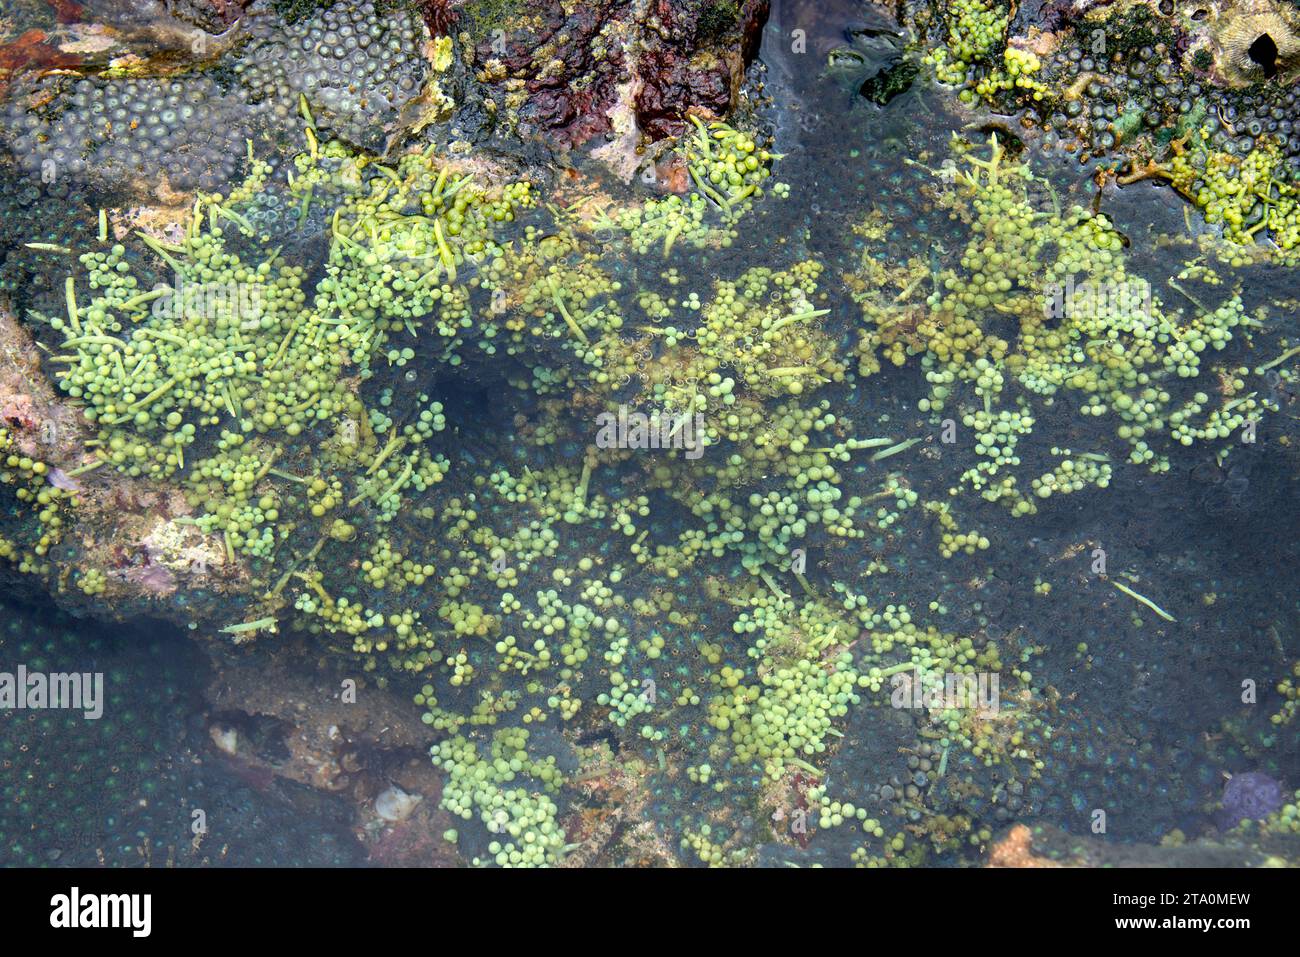 Sea grapes (Caulerpa racemosa) is a marine green alga. This photo was taken in Salvador de Bahia, Brazil. Stock Photo